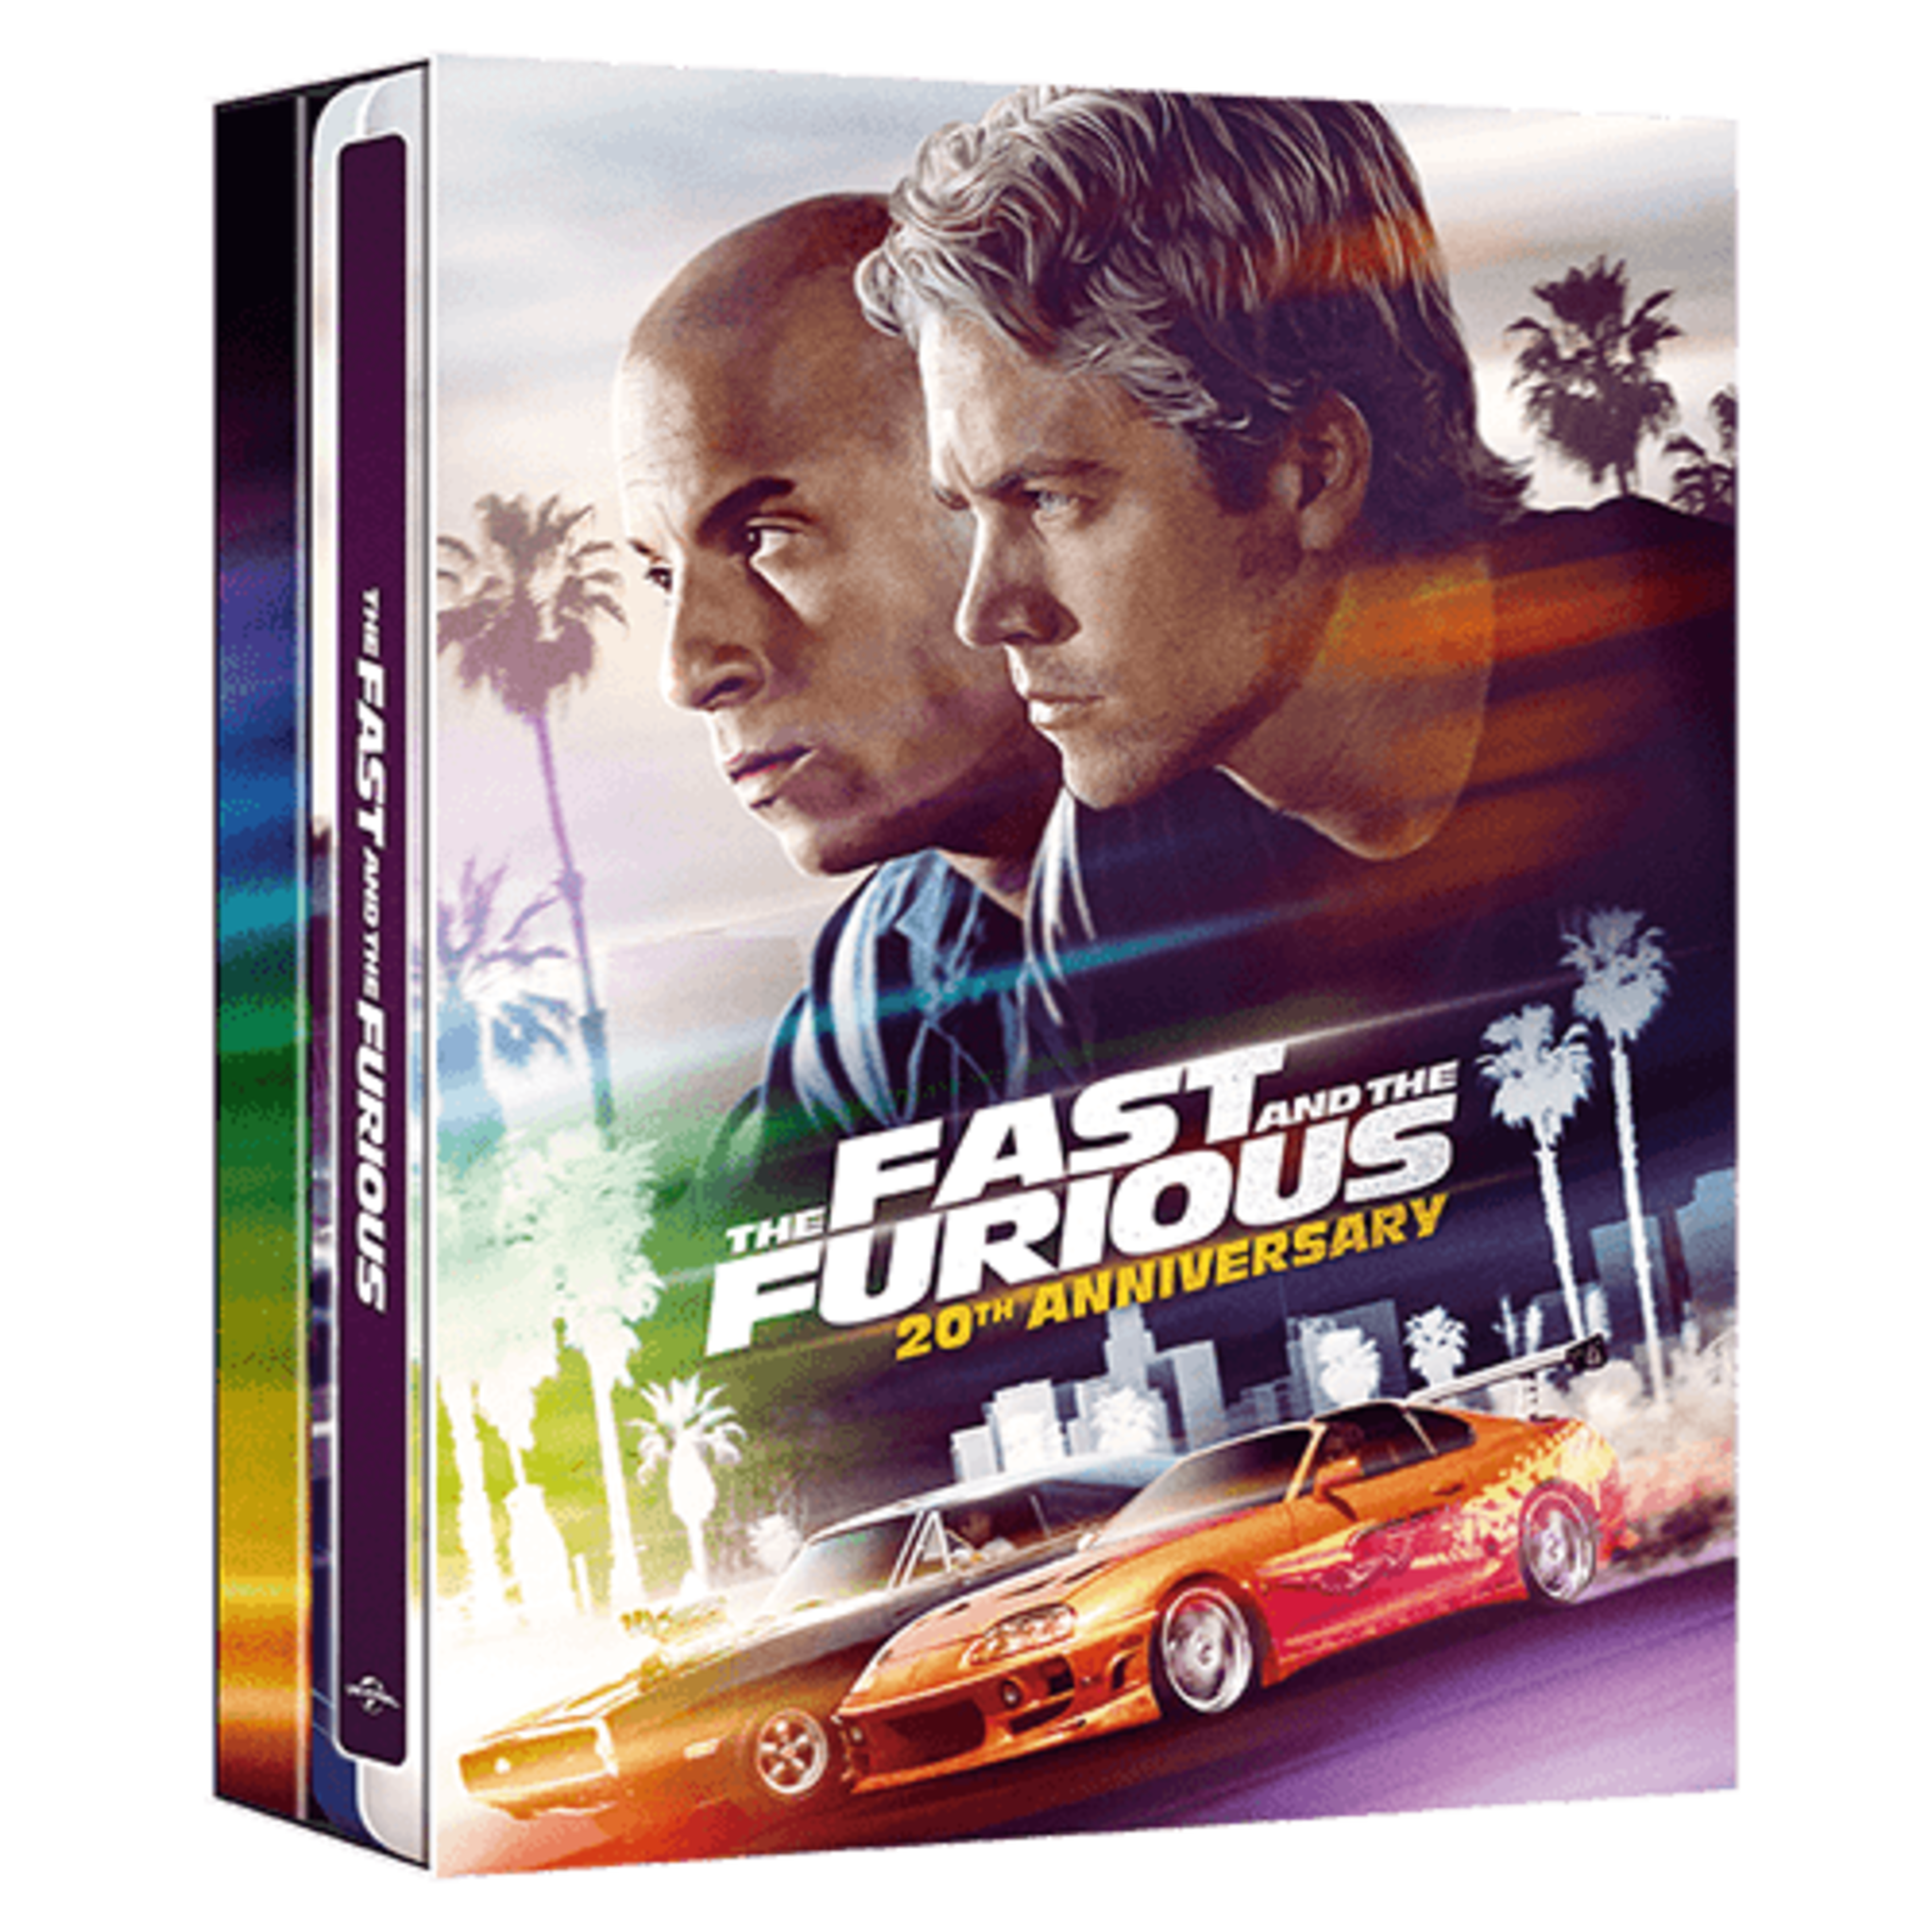 Fastand Furious20th Anniversary Box Set